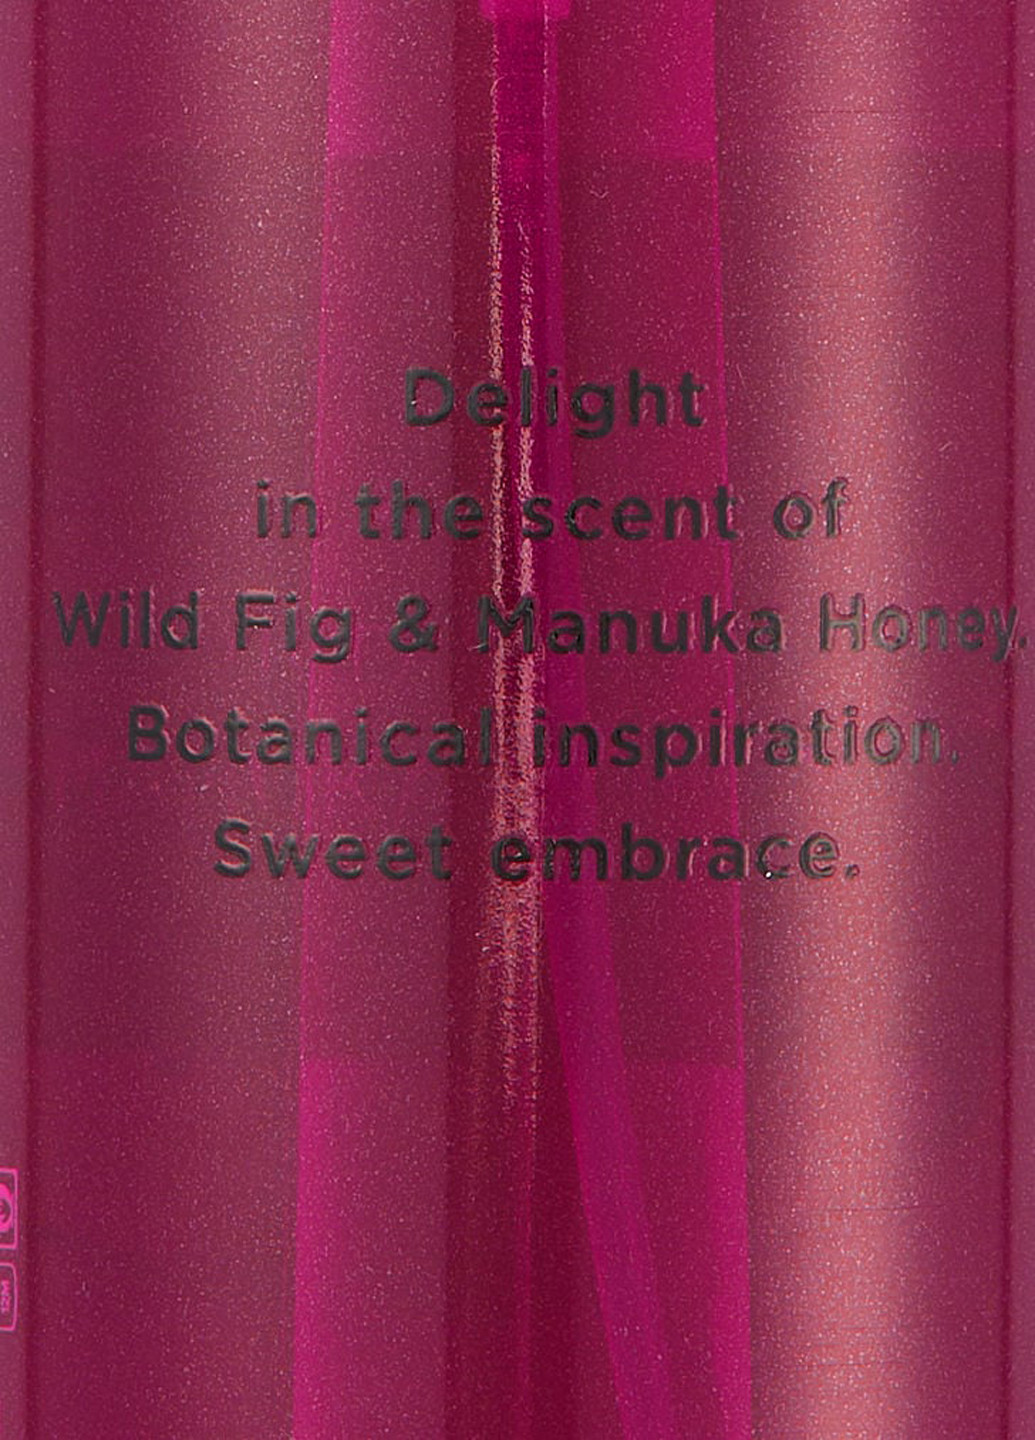 Парфумерний набір Wild Fig & Manuka Honey (4 пр.) Victoria's Secret (276777090)